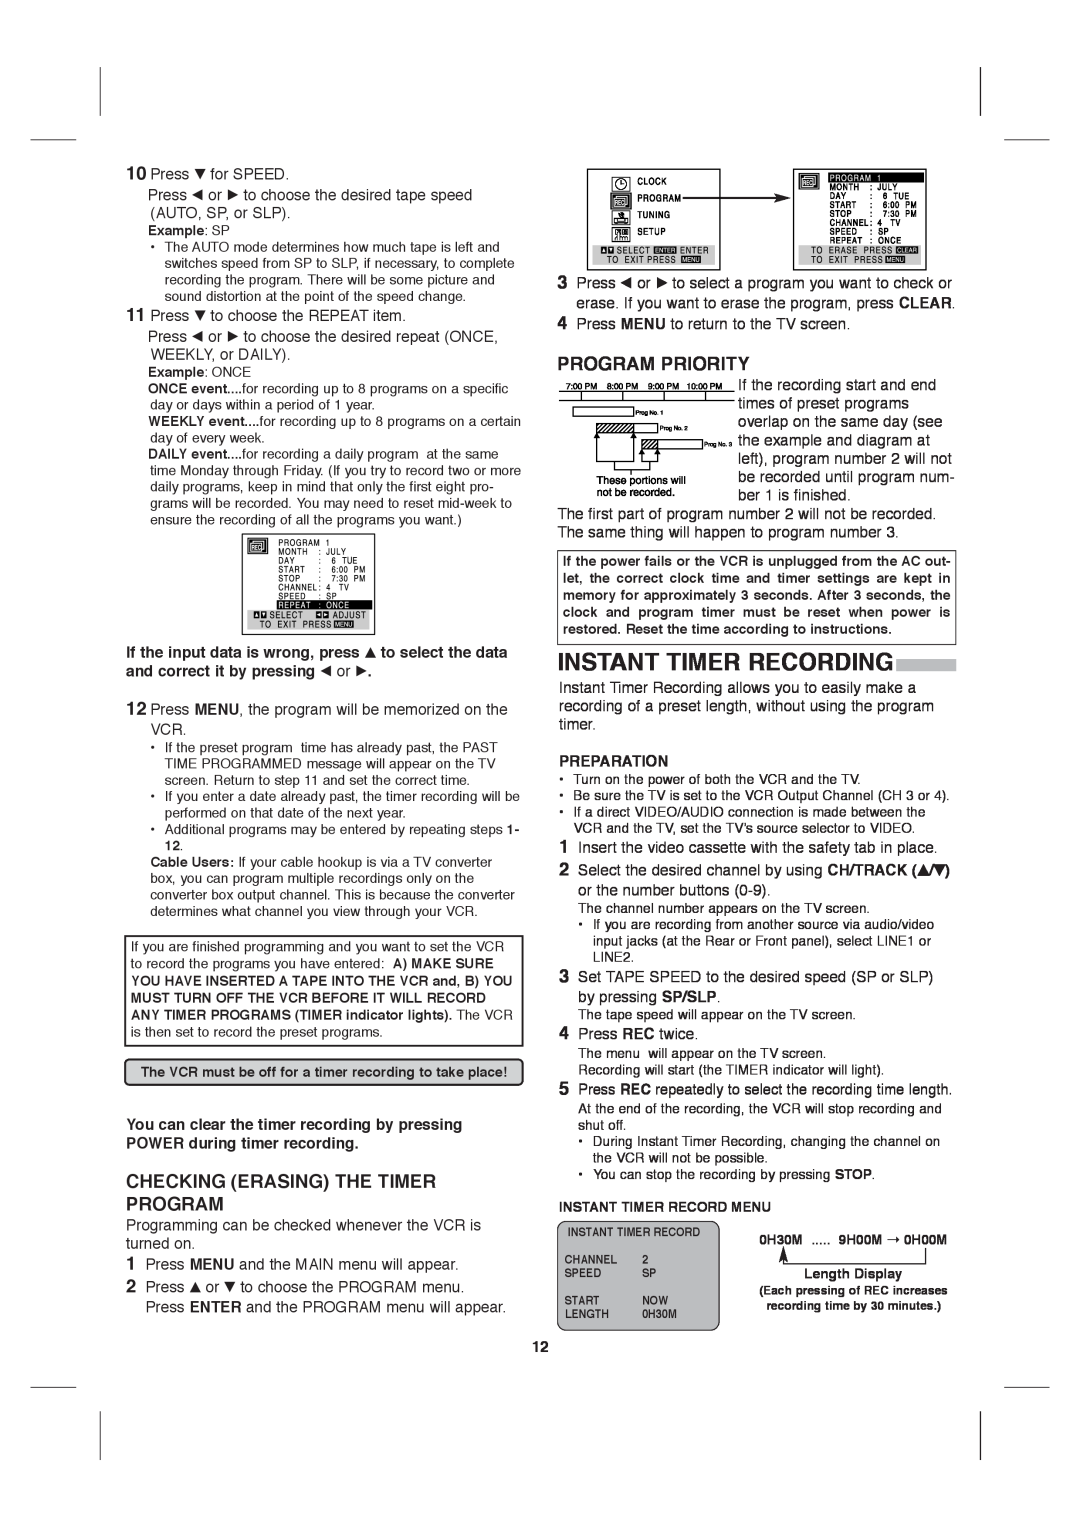 Sanyo VWM-900 instruction manual Instant Timer Recording, Checking Erasing The Timer Program, Program Priority 